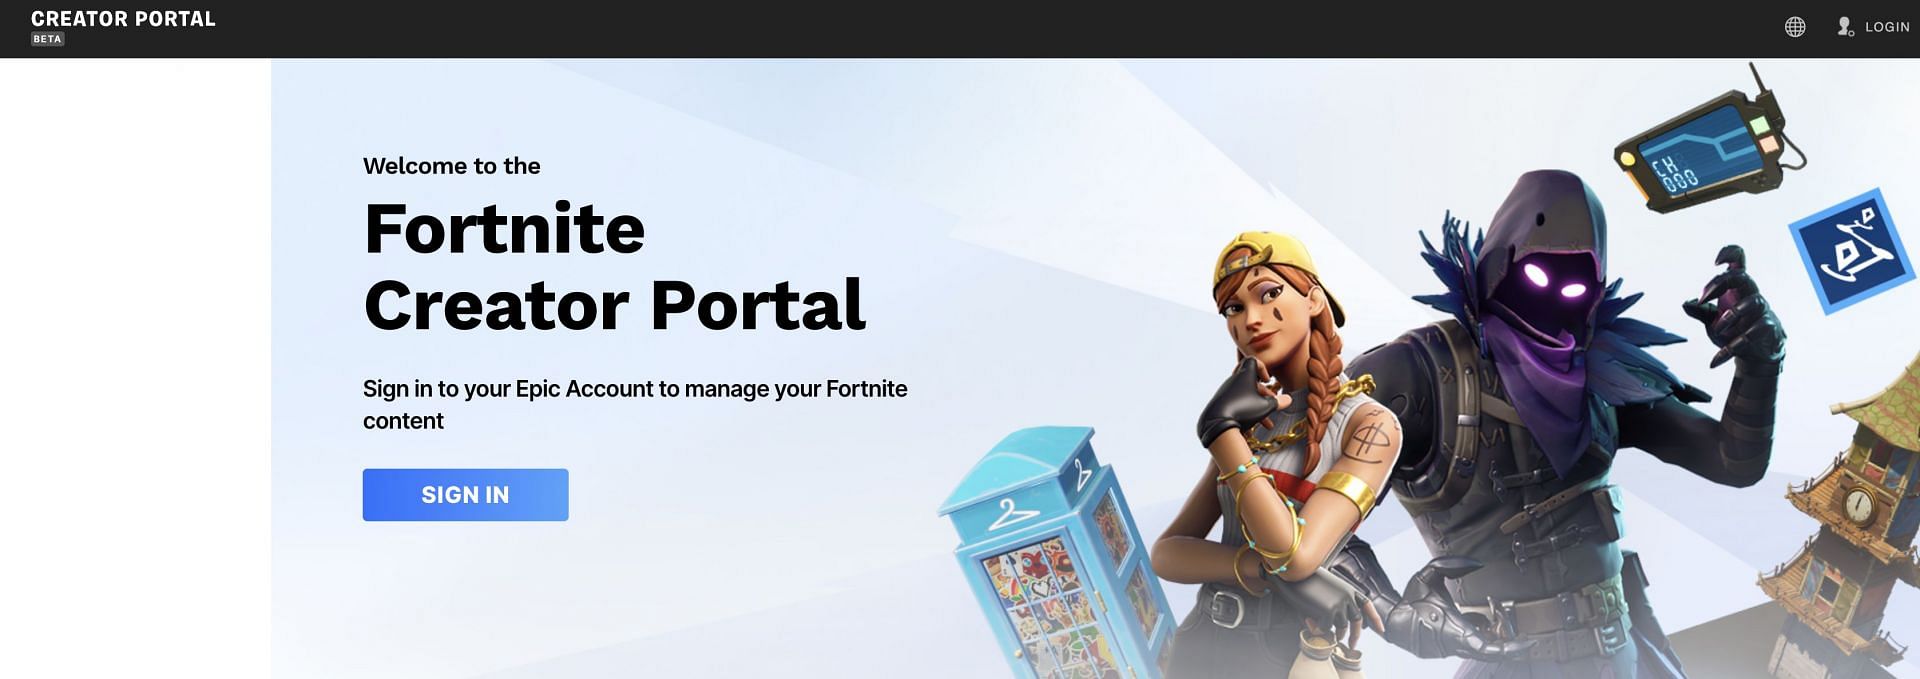 The Creator Portal website (Image via Epic Games)